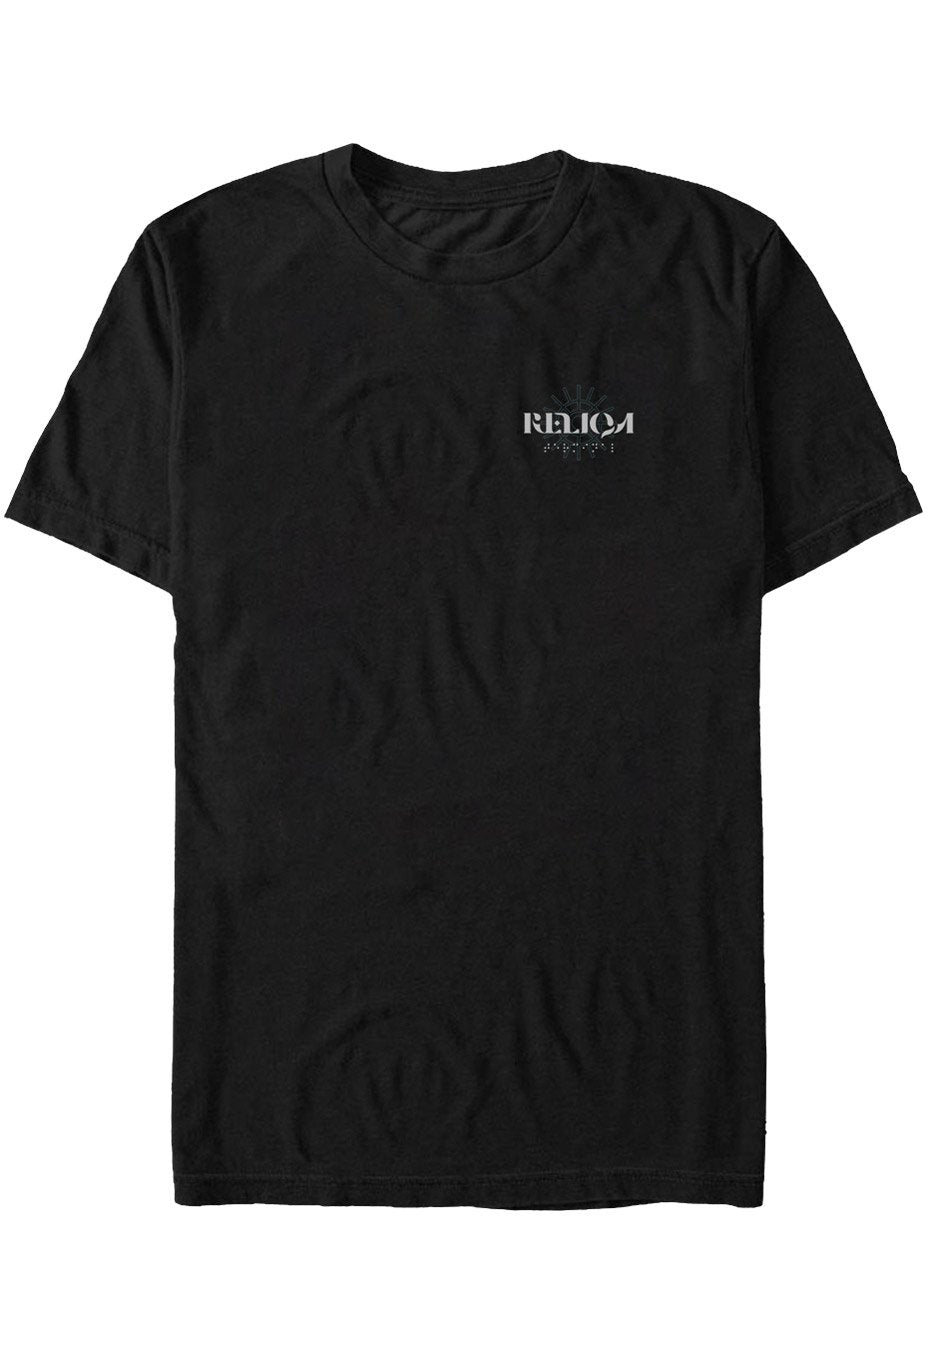 Reliqa - Terminal - T-Shirt